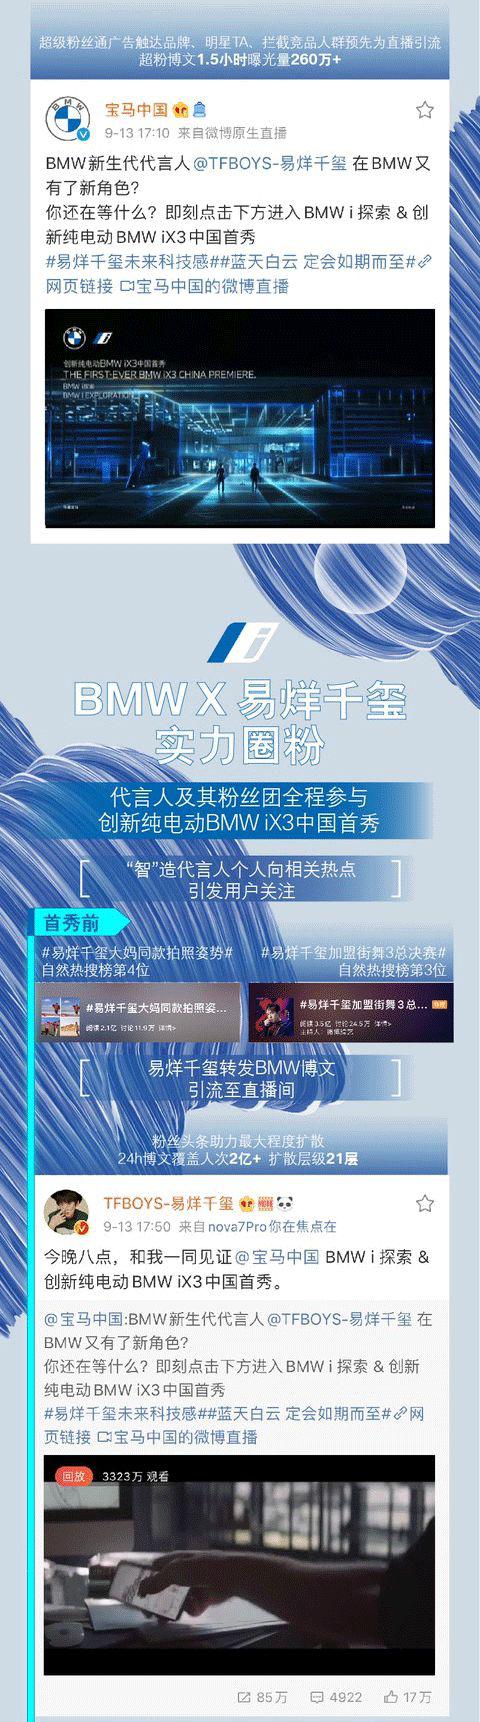 BMW iX3中国首秀24小时微博战报